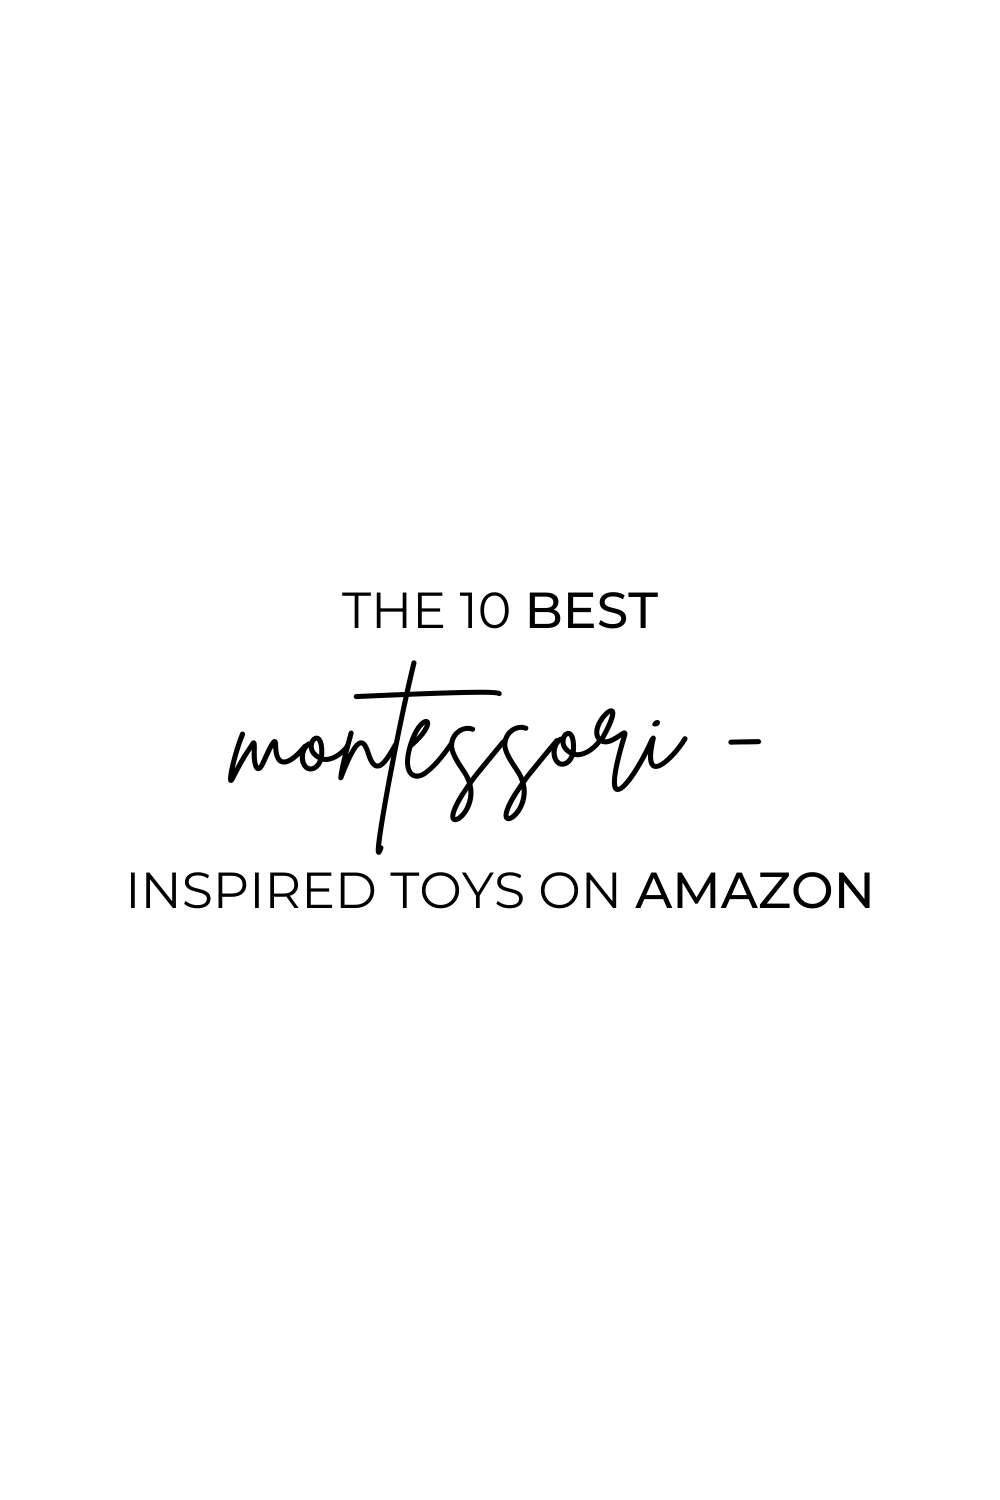 10 Best Montessori Inspired Toys on Amazon